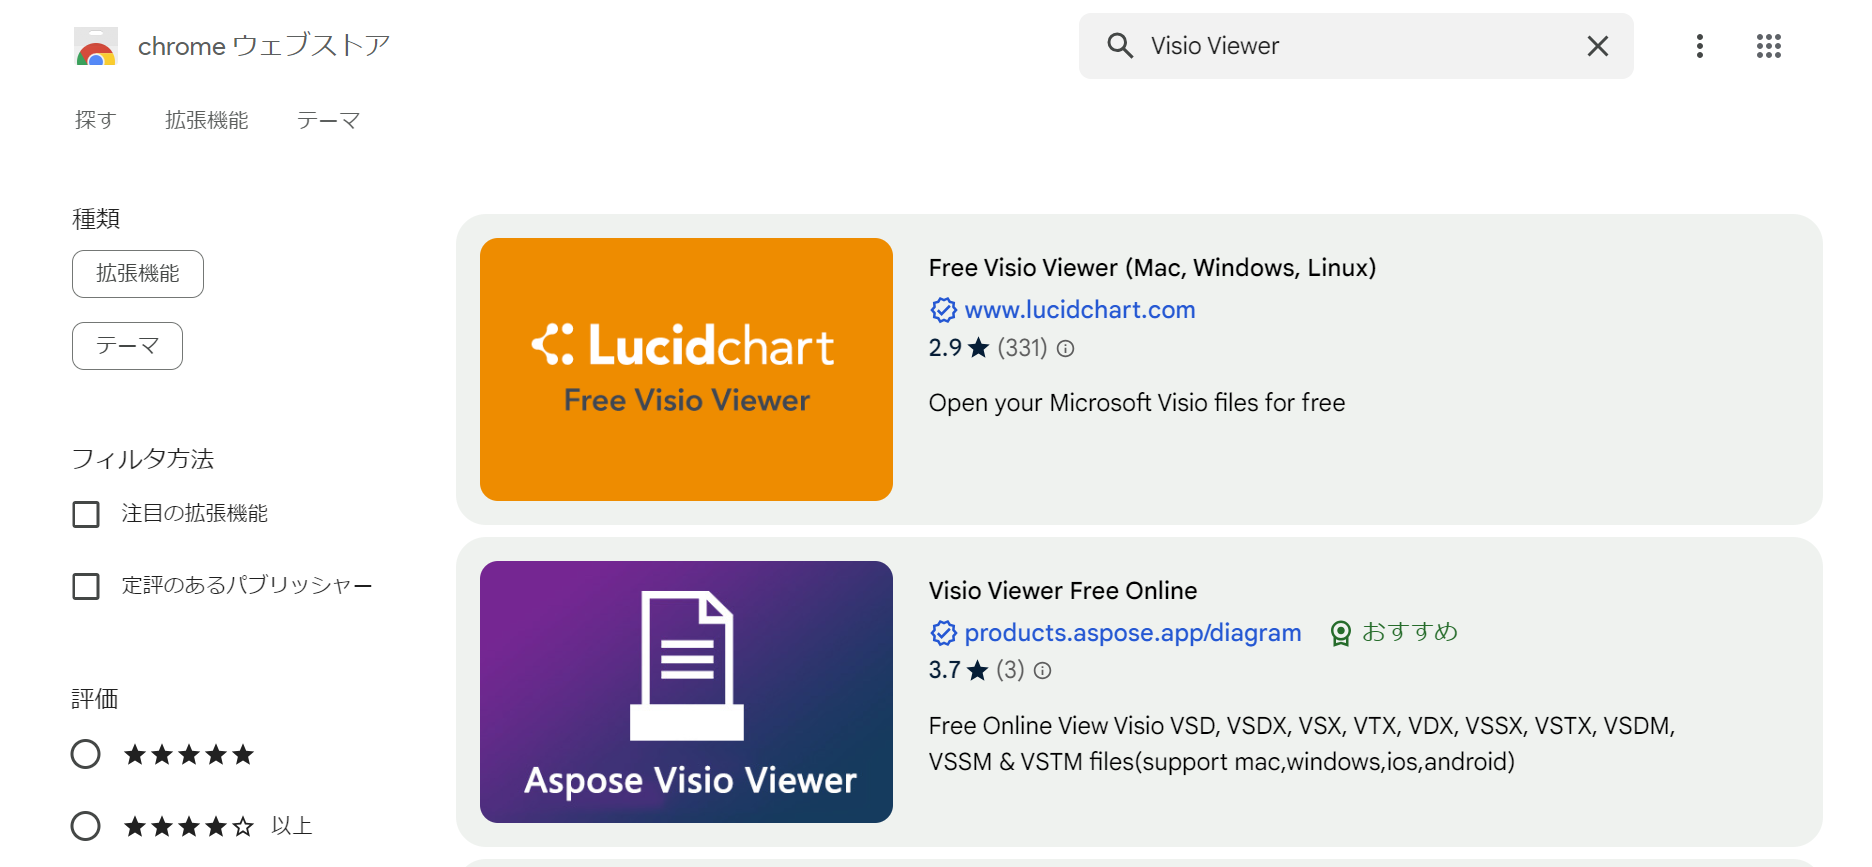 Visio Viewerの拡張機能が表示されるので、クリックして追加する